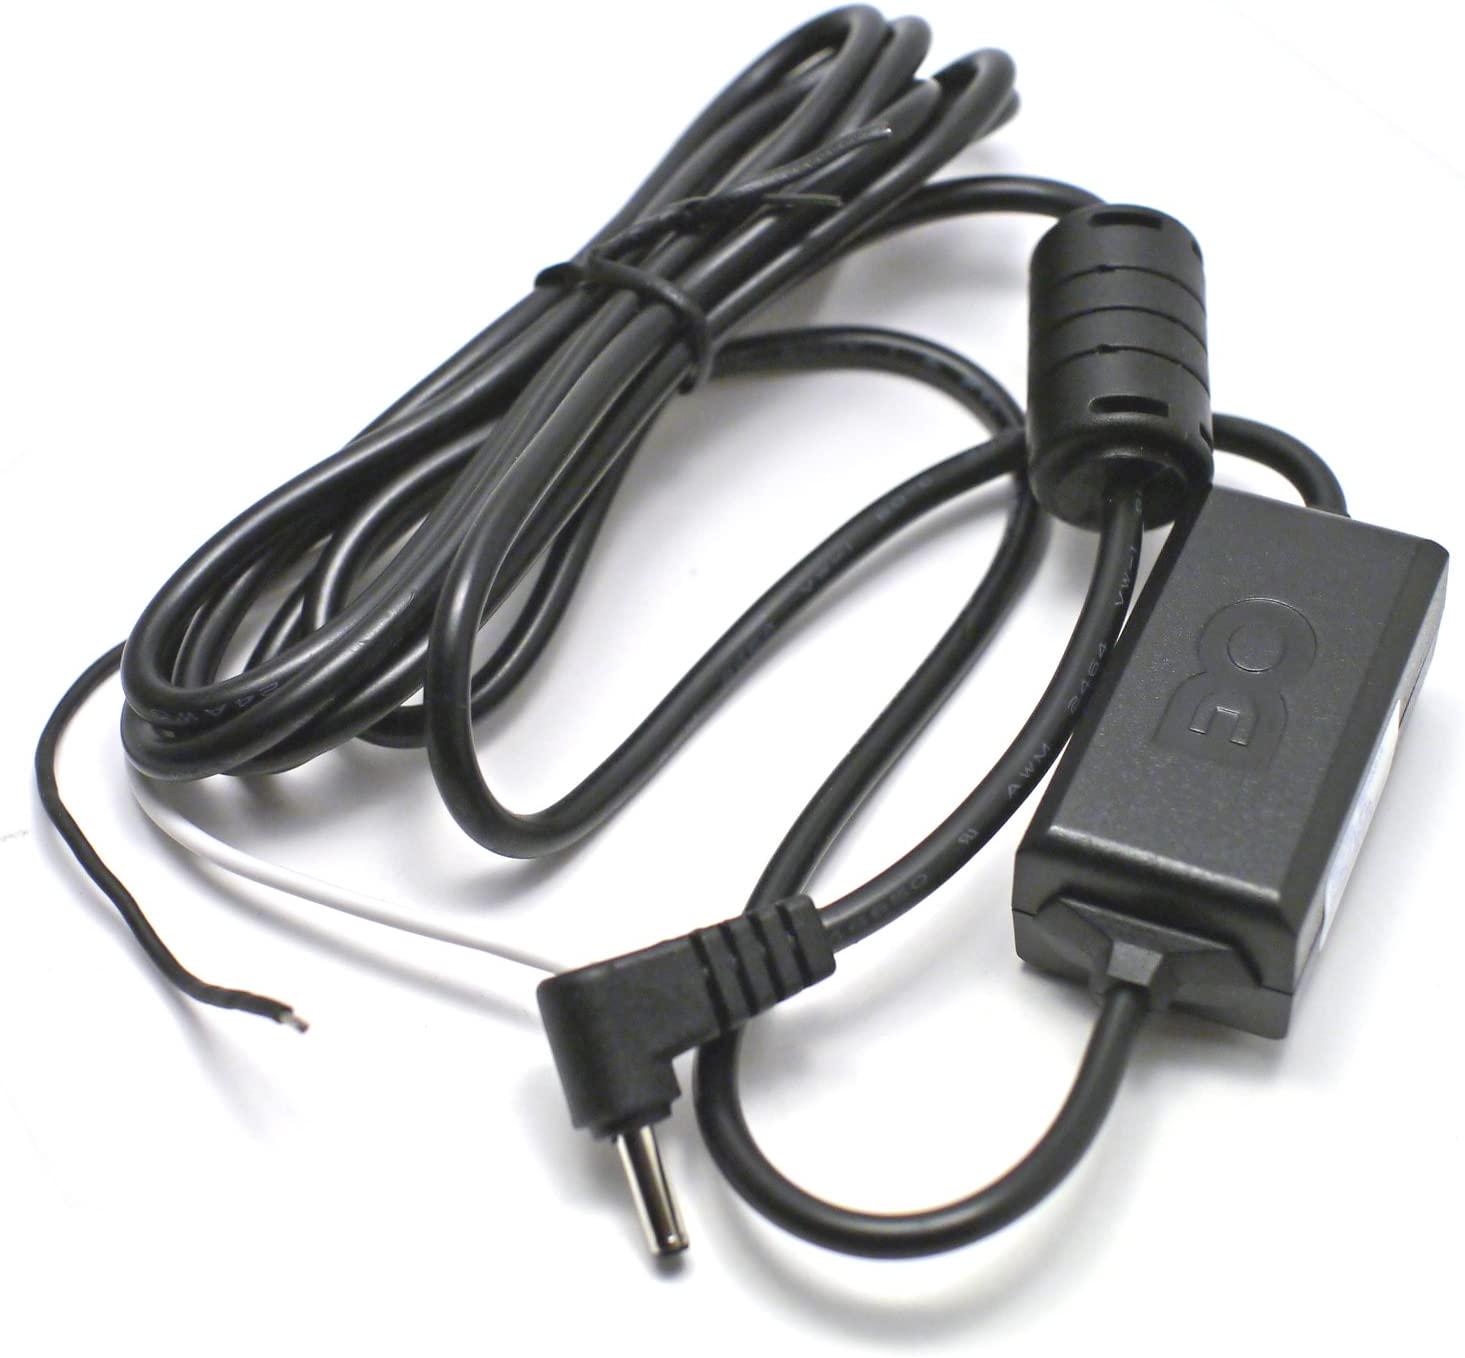 EDOTech, EDO Tech Direct Hardwire Vehicle Power Cord 5V Adapter Kit for Sirius XM Radio Sportster Starmate Stratus Delphi Tao XM2GO Pioneer Inno SUPV1 UC8 136-4458 SV3 CD-XMPCAR1 Dock